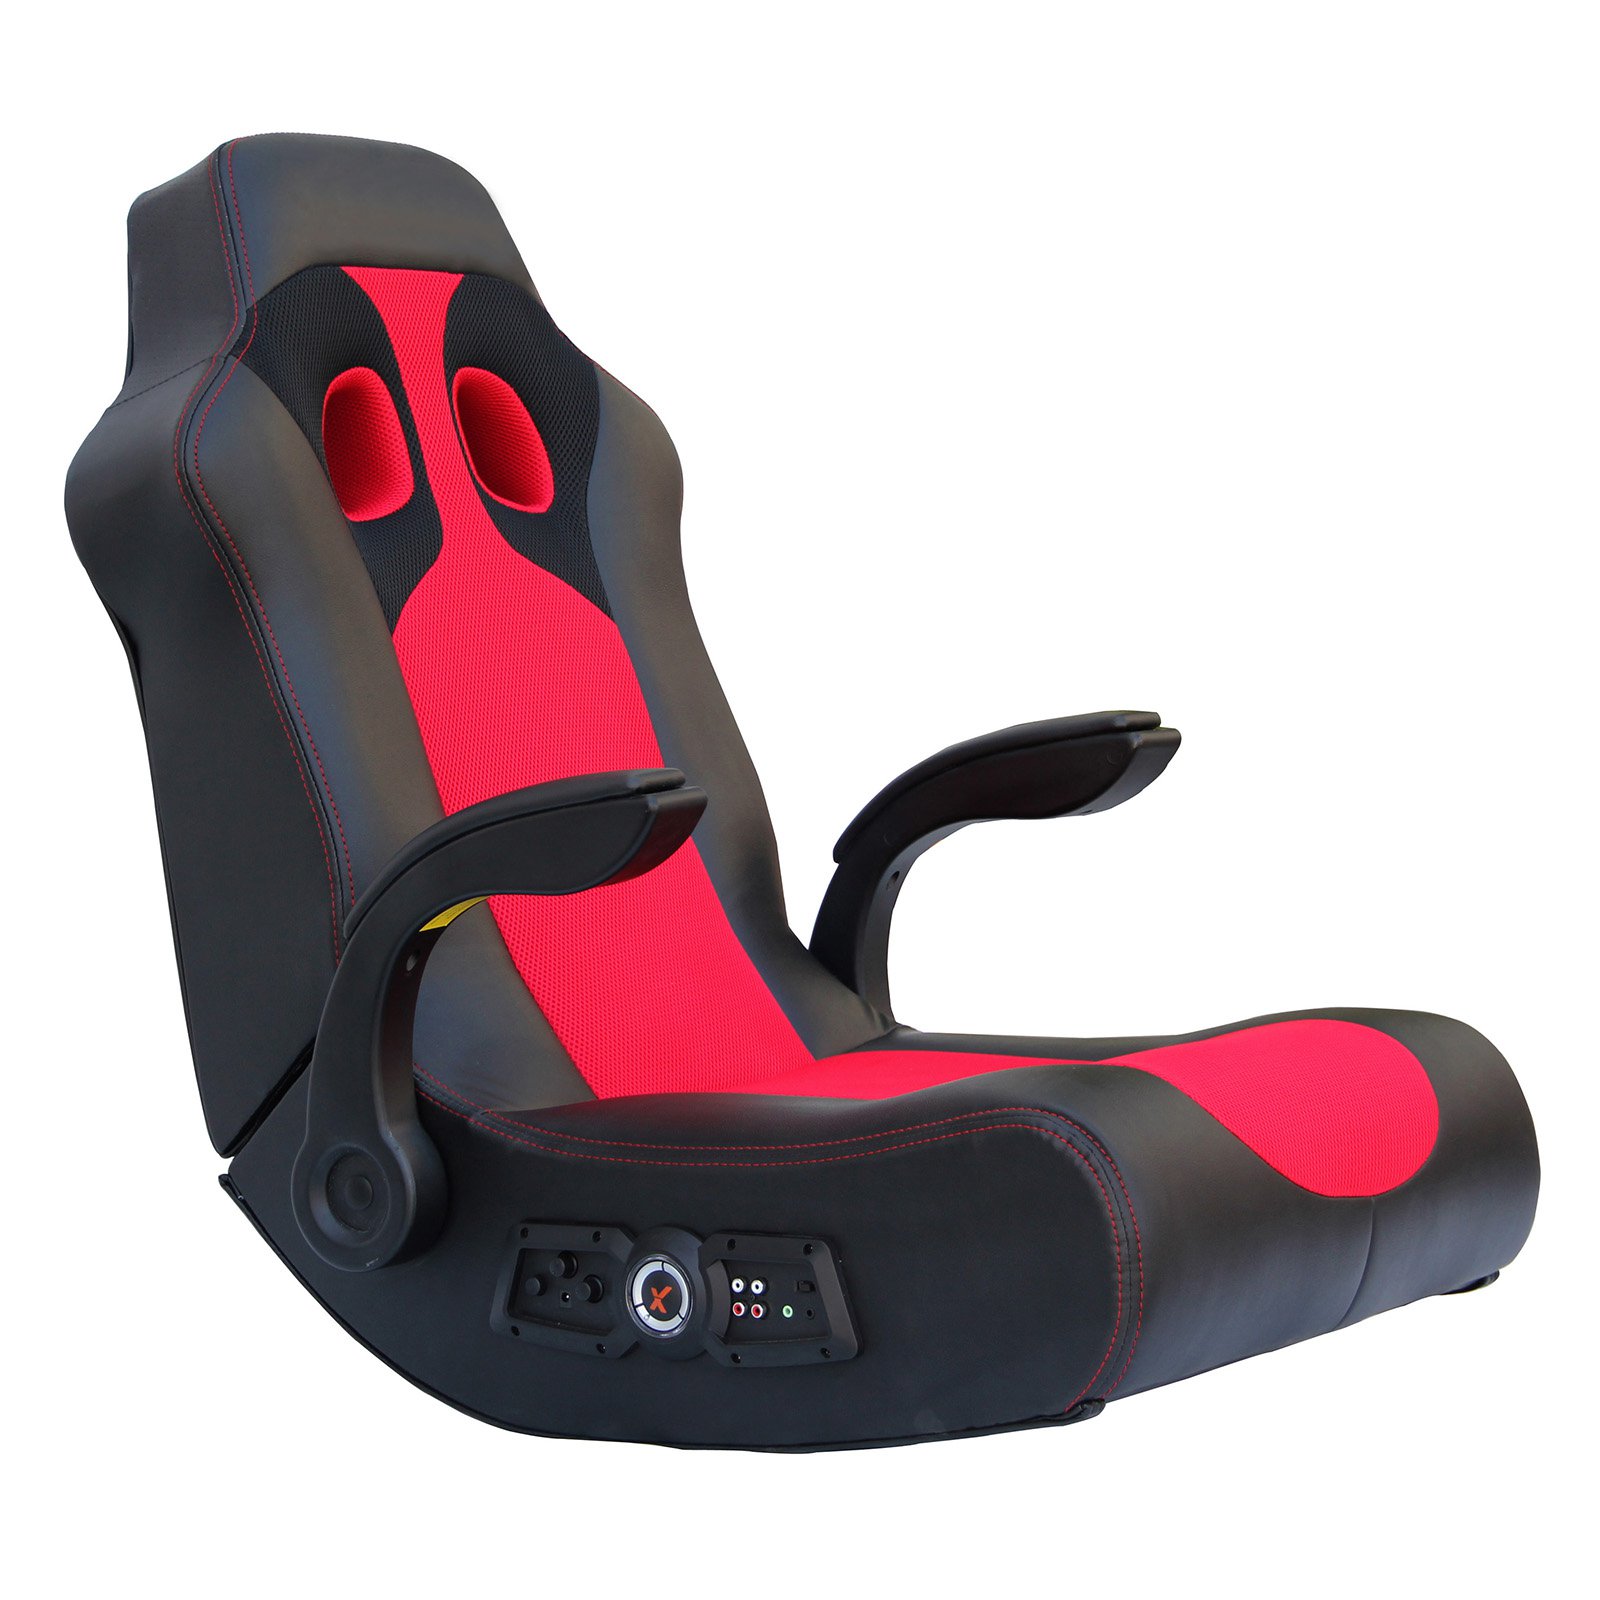 X Rocker Vibe 2.1 Bluetooth Gaming Chair Rocker, Black/Red, 5172801 - image 1 of 5